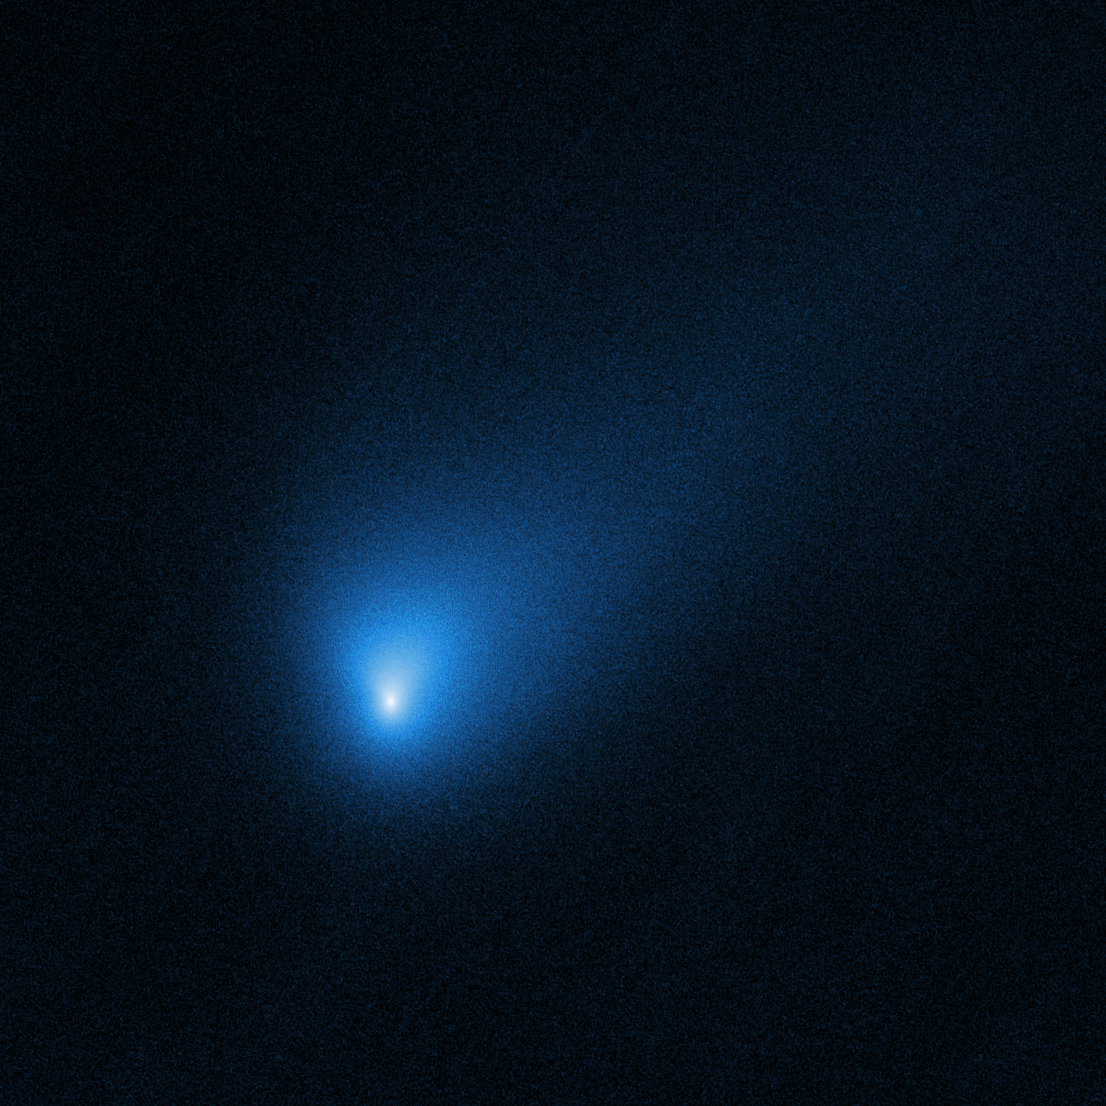 Nasa delt bilder av den første interstellare kometer